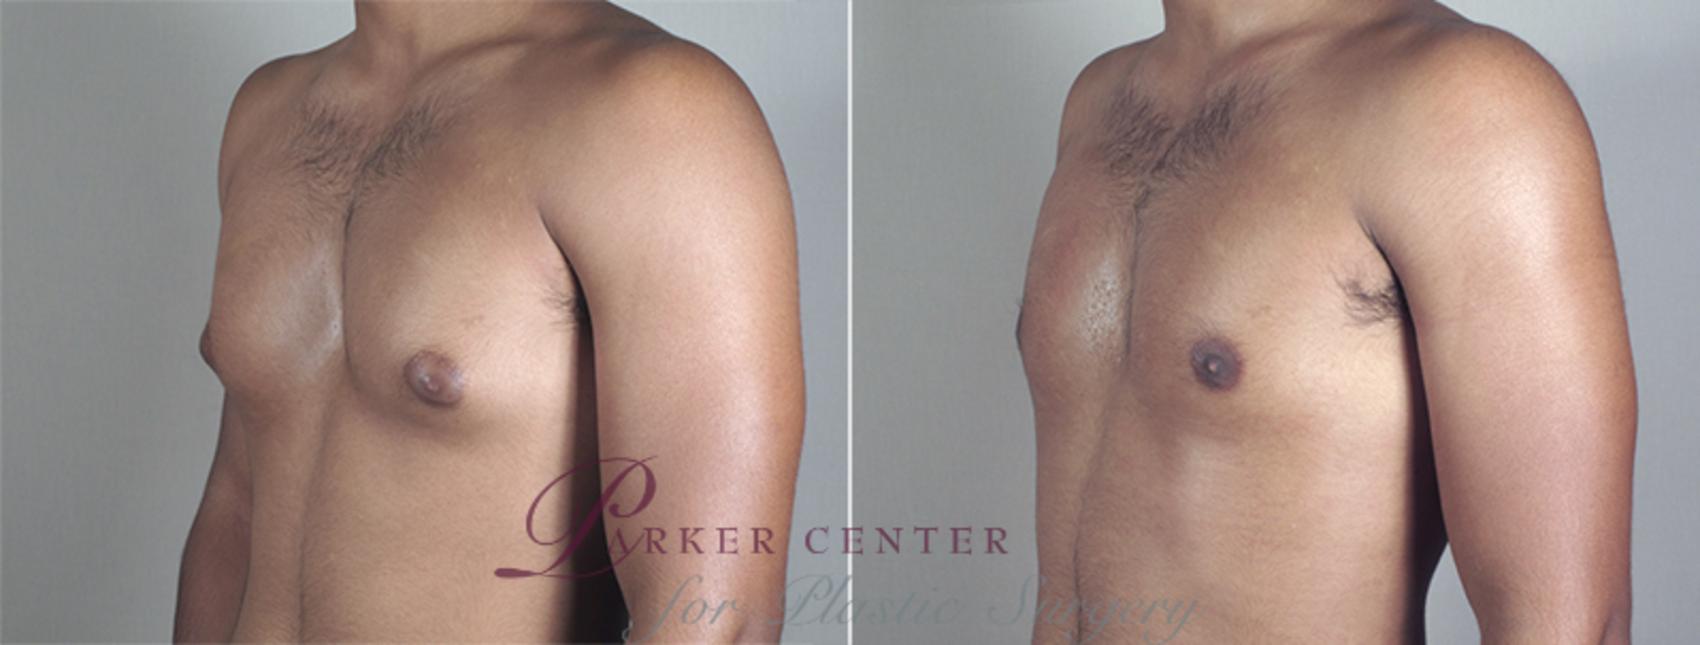 Gynecomastia Surgery Case 639 Before & After View #2 | Paramus, NJ | Parker Center for Plastic Surgery